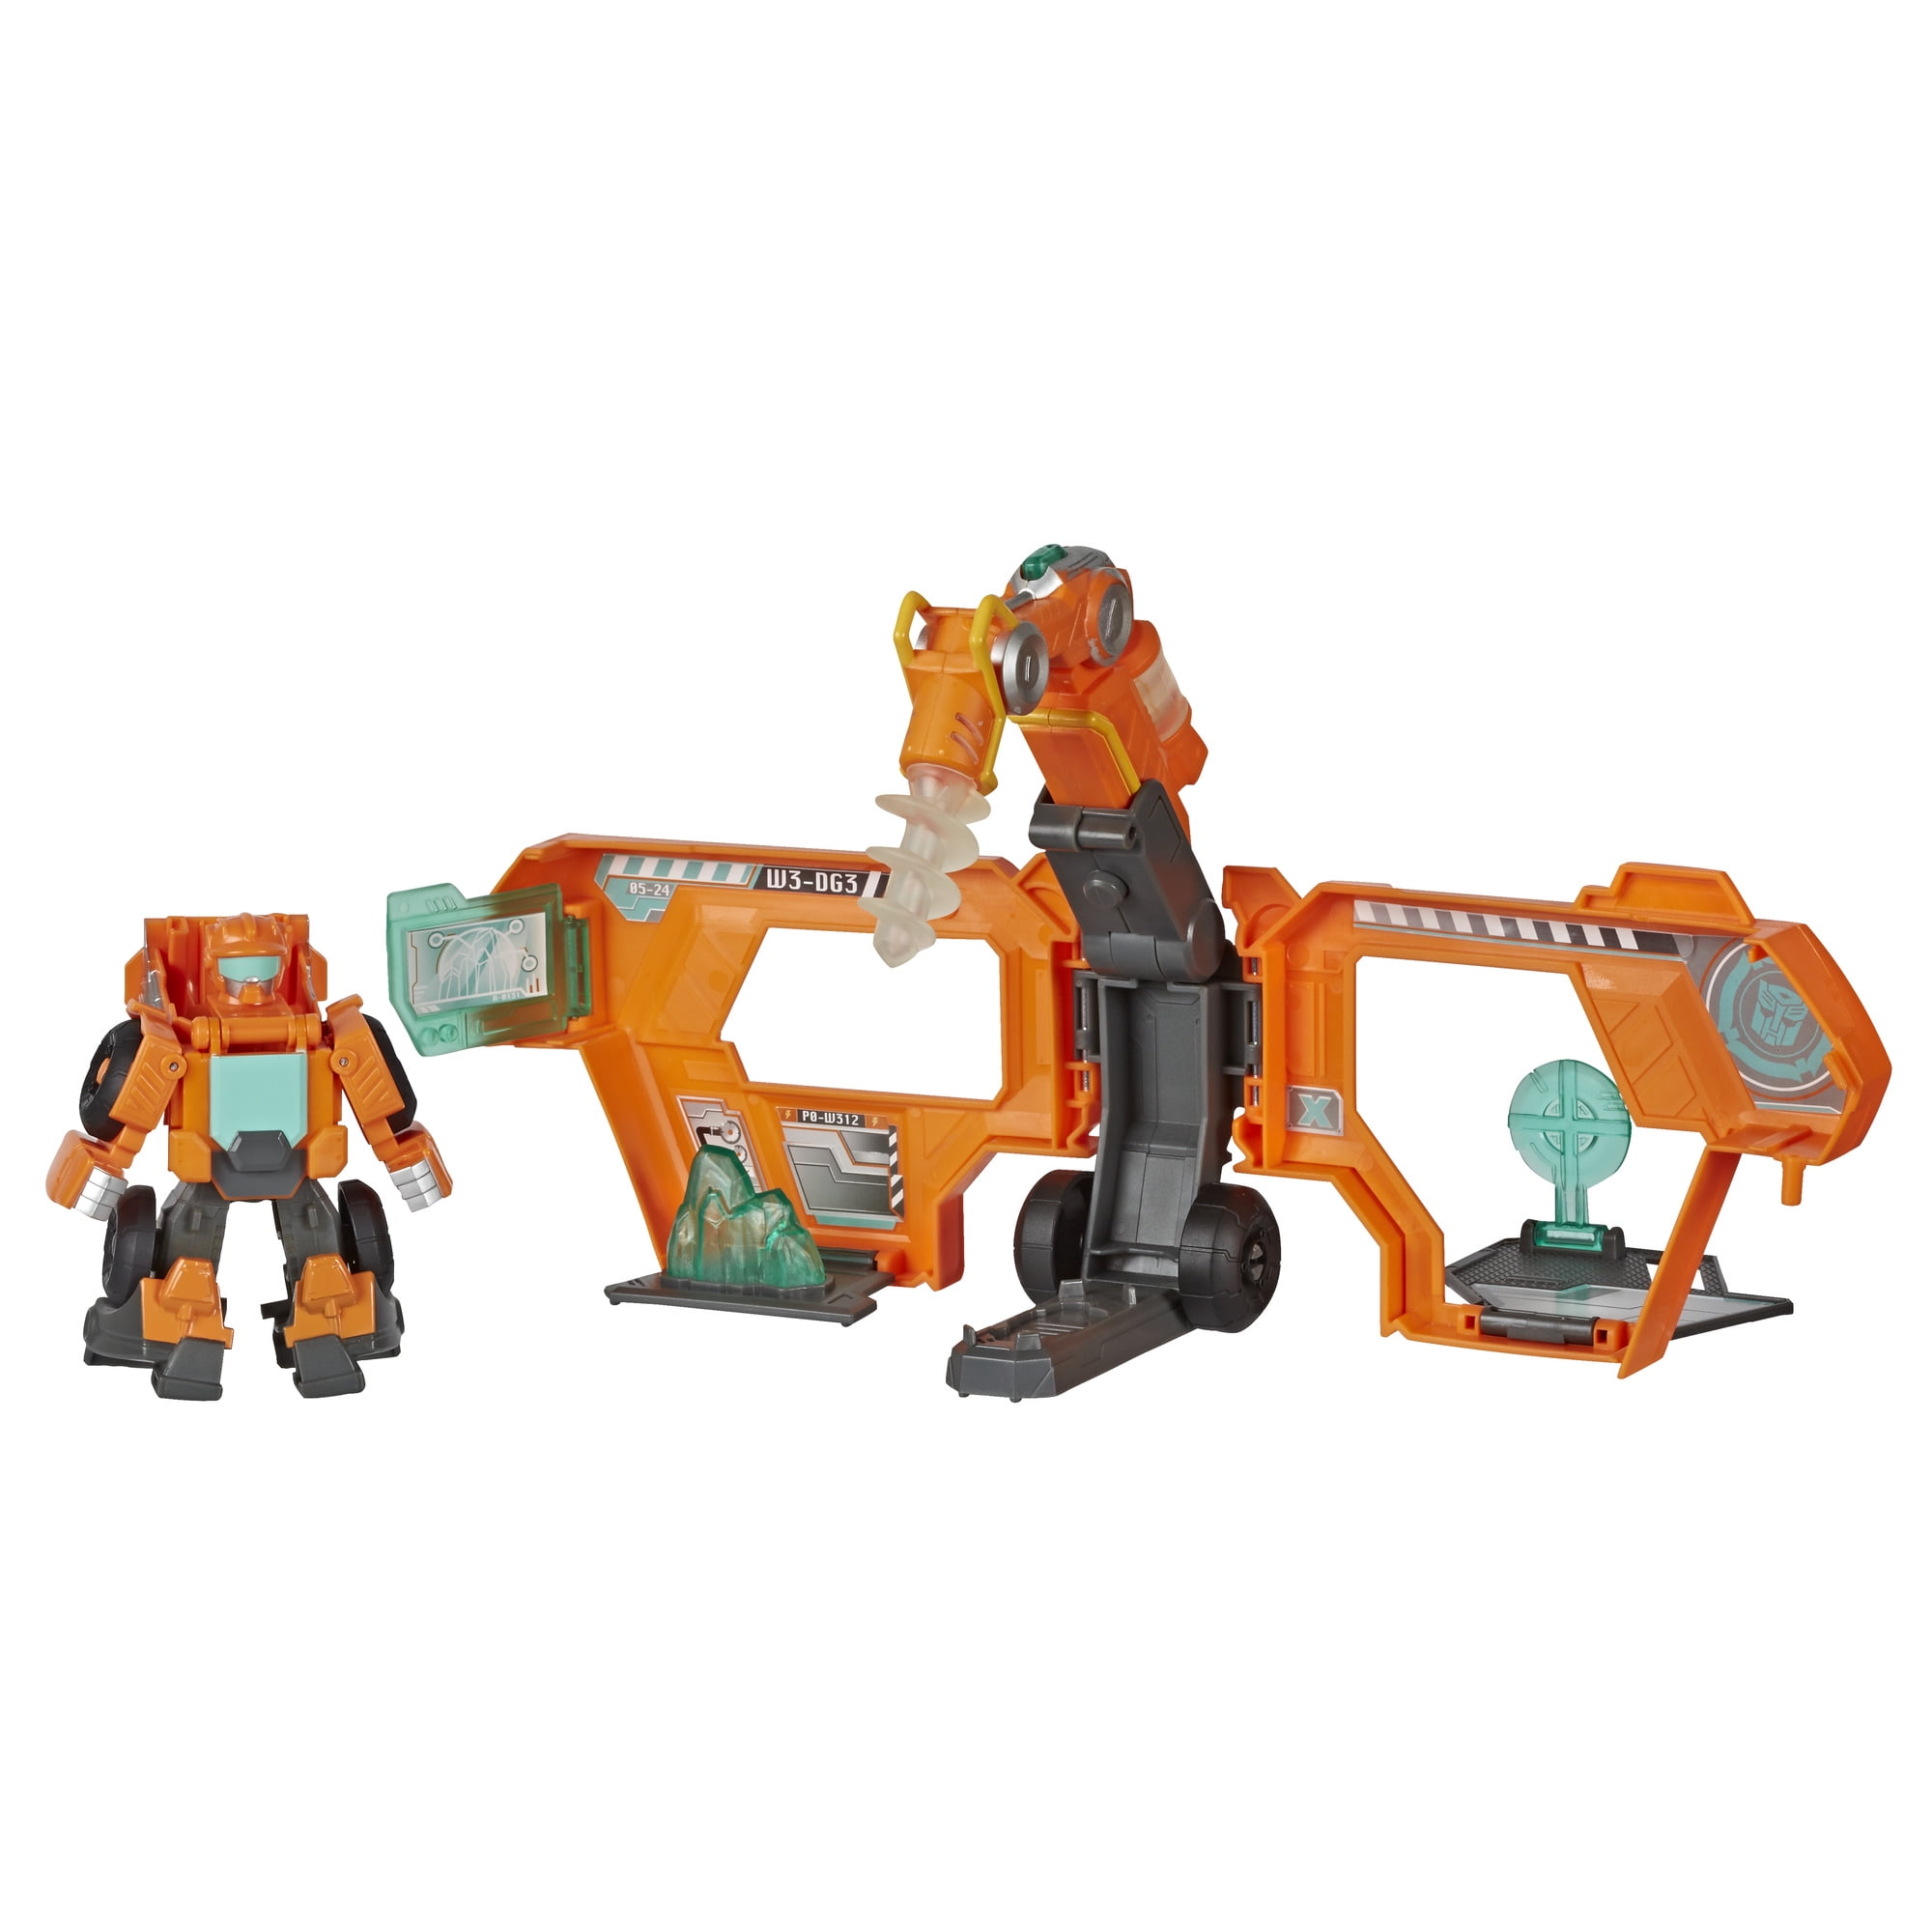 Playskool Heroes Transformers Rescue Bots Brushfire - Walmart.com